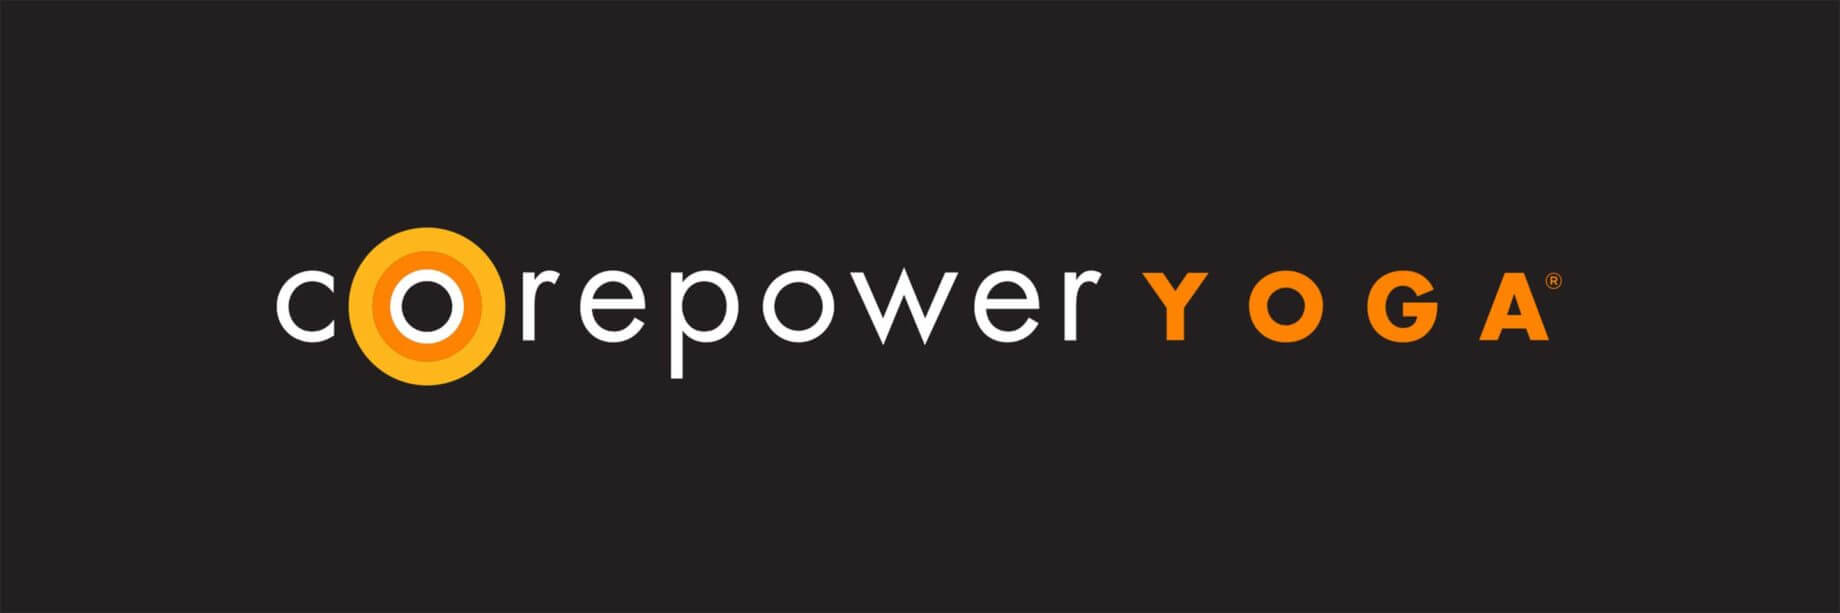 CorePower Yoga - Common Good